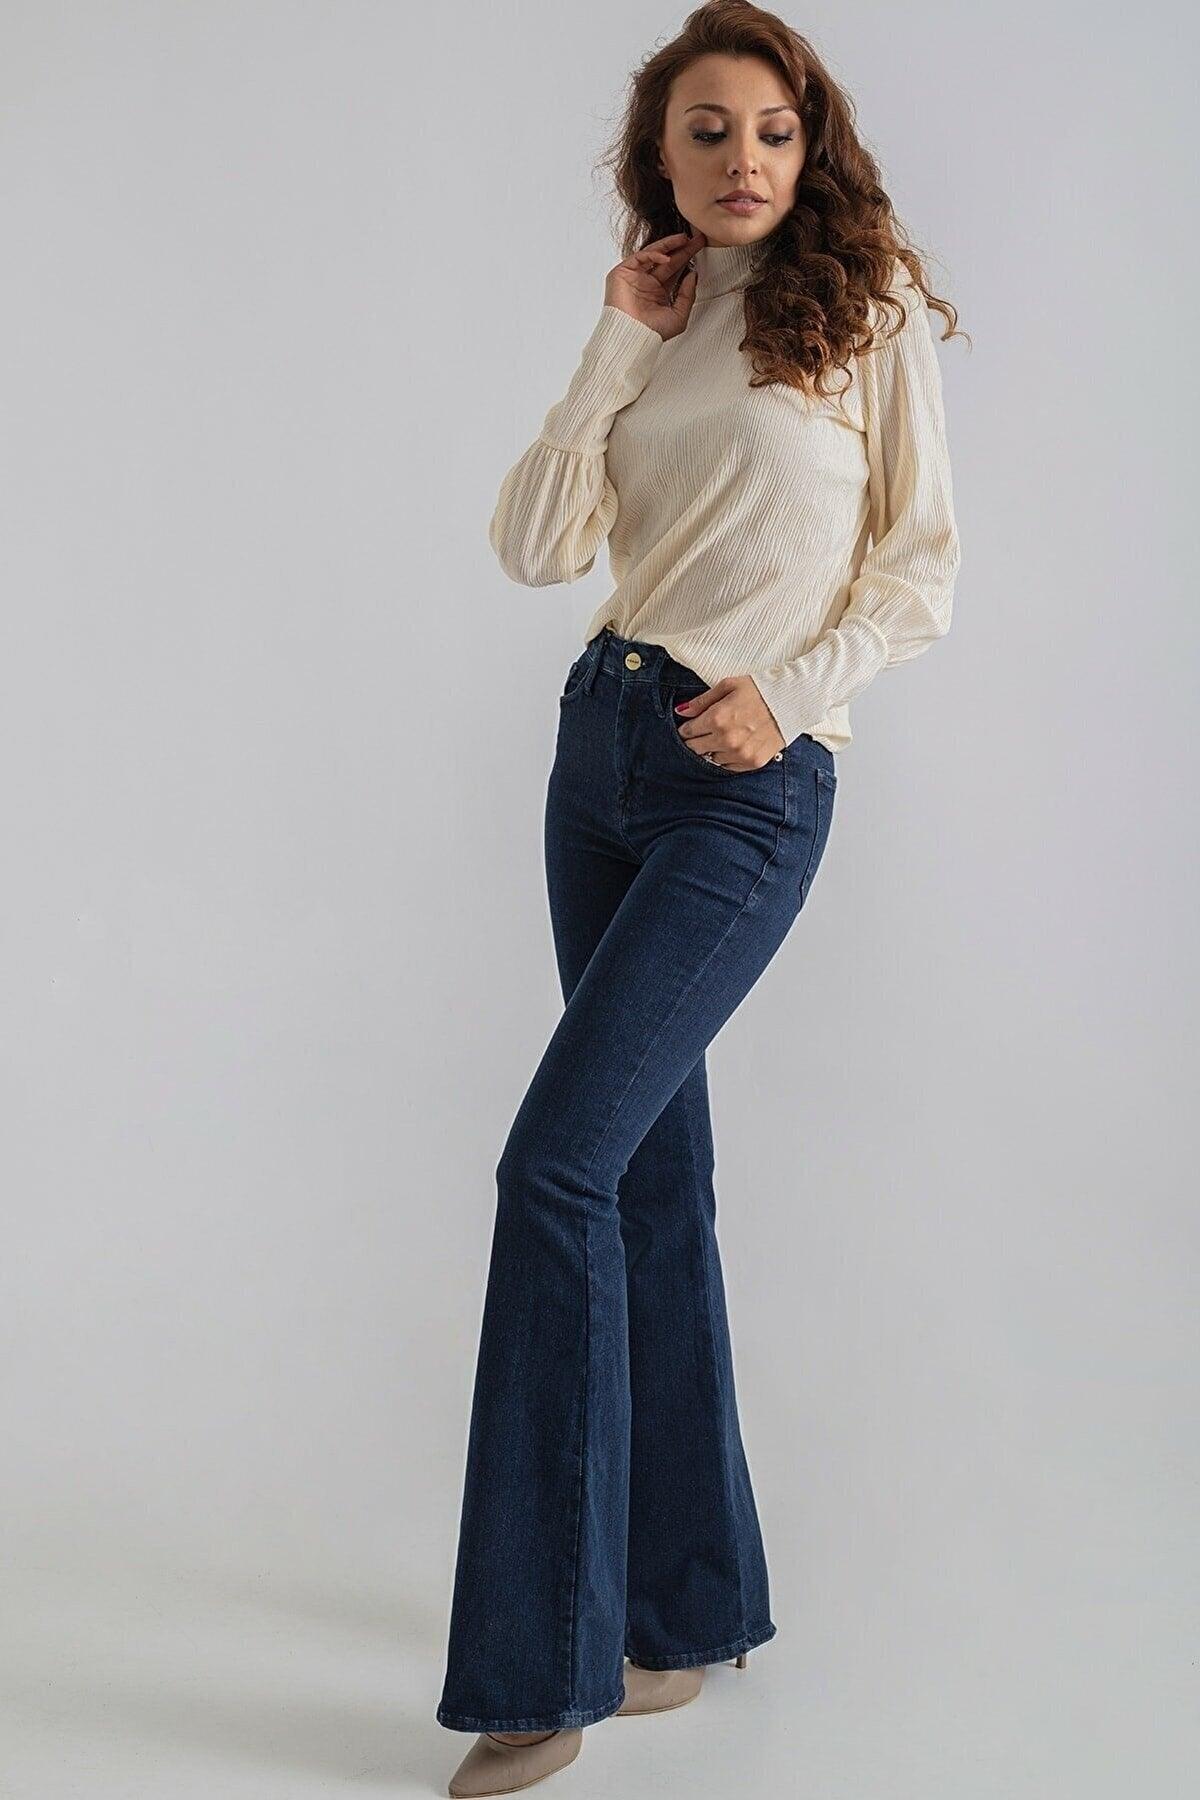 Sansa Flare Jeans Spanish Jeans High Waist Colorfast Dark Blue Spanish Jeans ( Lycra ) - Swordslife